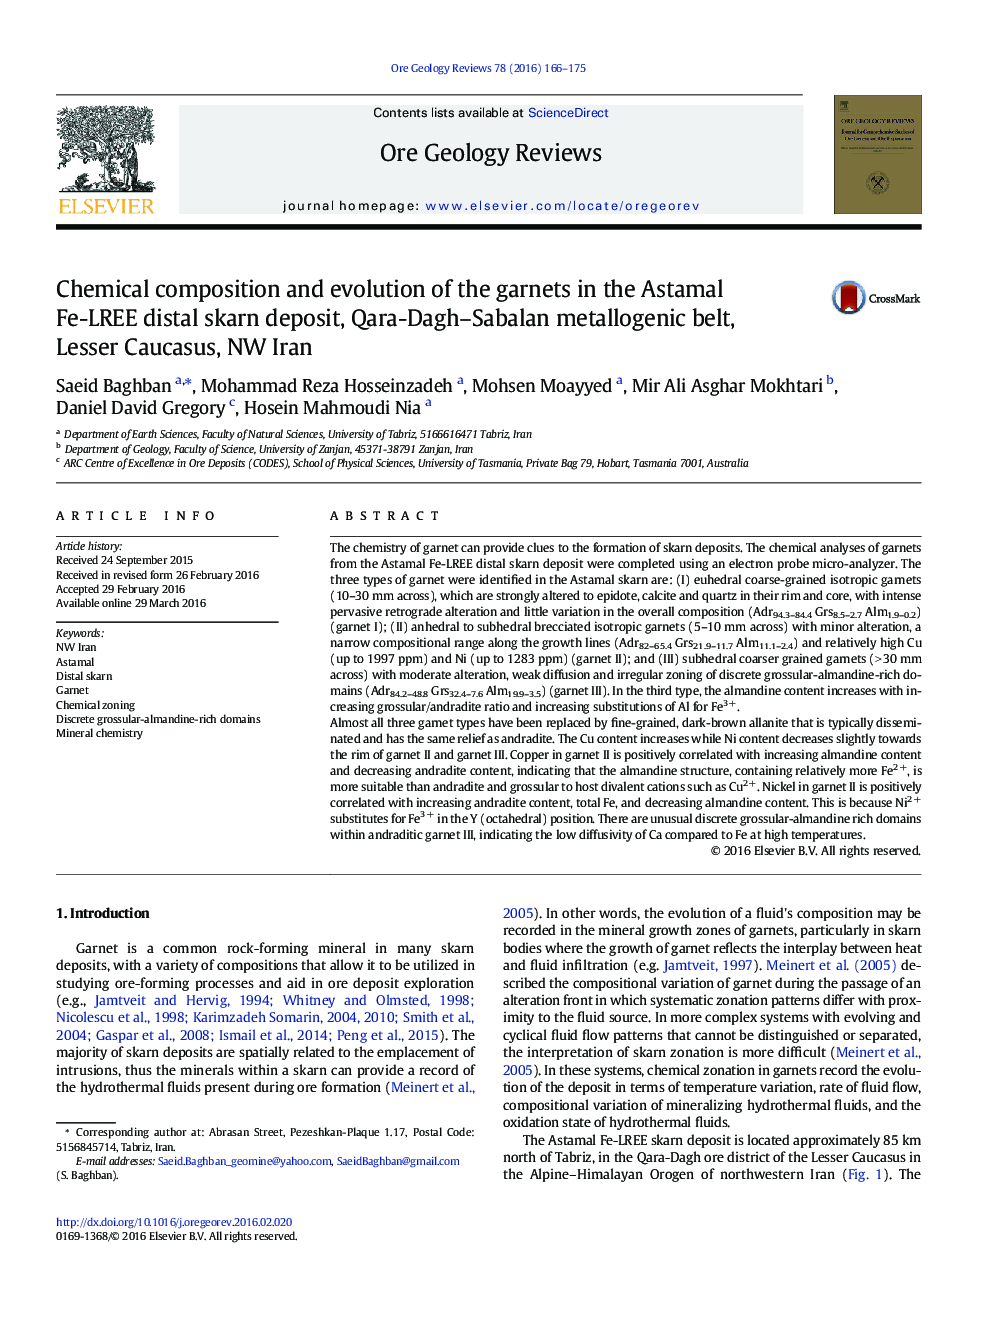 Chemical composition and evolution of the garnets in the Astamal Fe-LREE distal skarn deposit, Qara-Dagh–Sabalan metallogenic belt, Lesser Caucasus, NW Iran